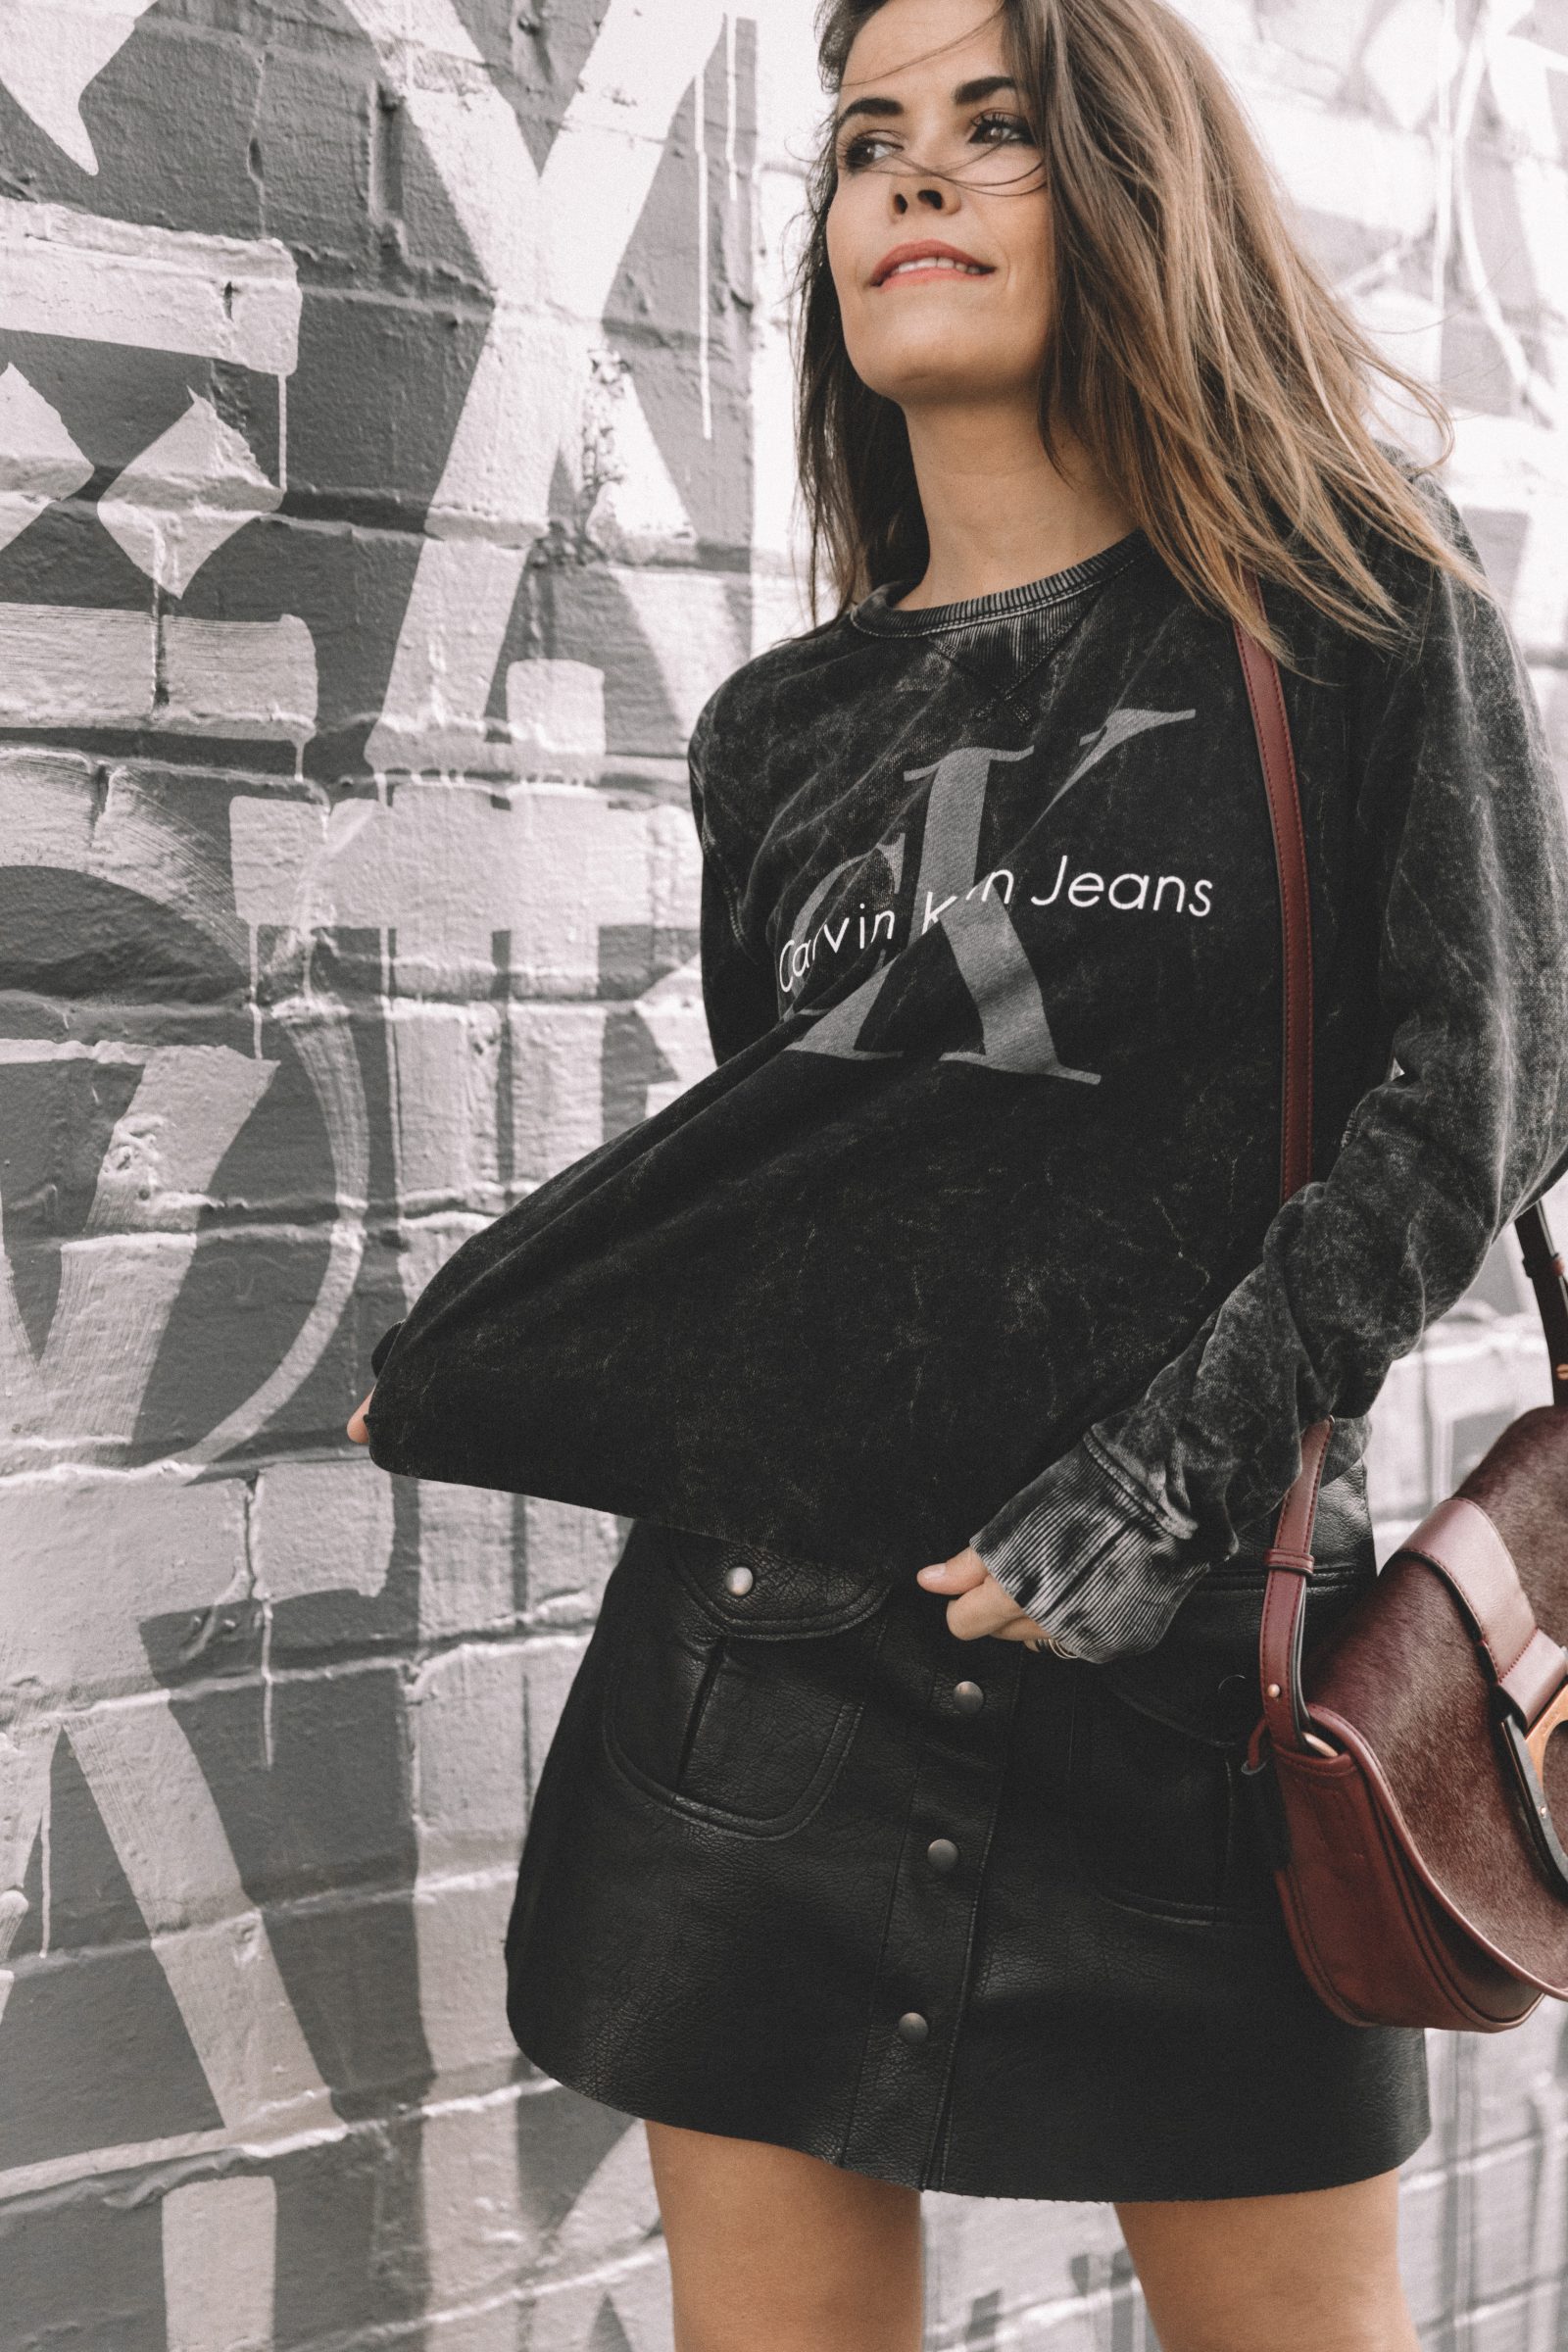 calvin_klein_bag-burgundy_bag-ck_sweatshirt-leather_shirt-total_black_outfit-street_style-los_angeles-collage_vintage-37